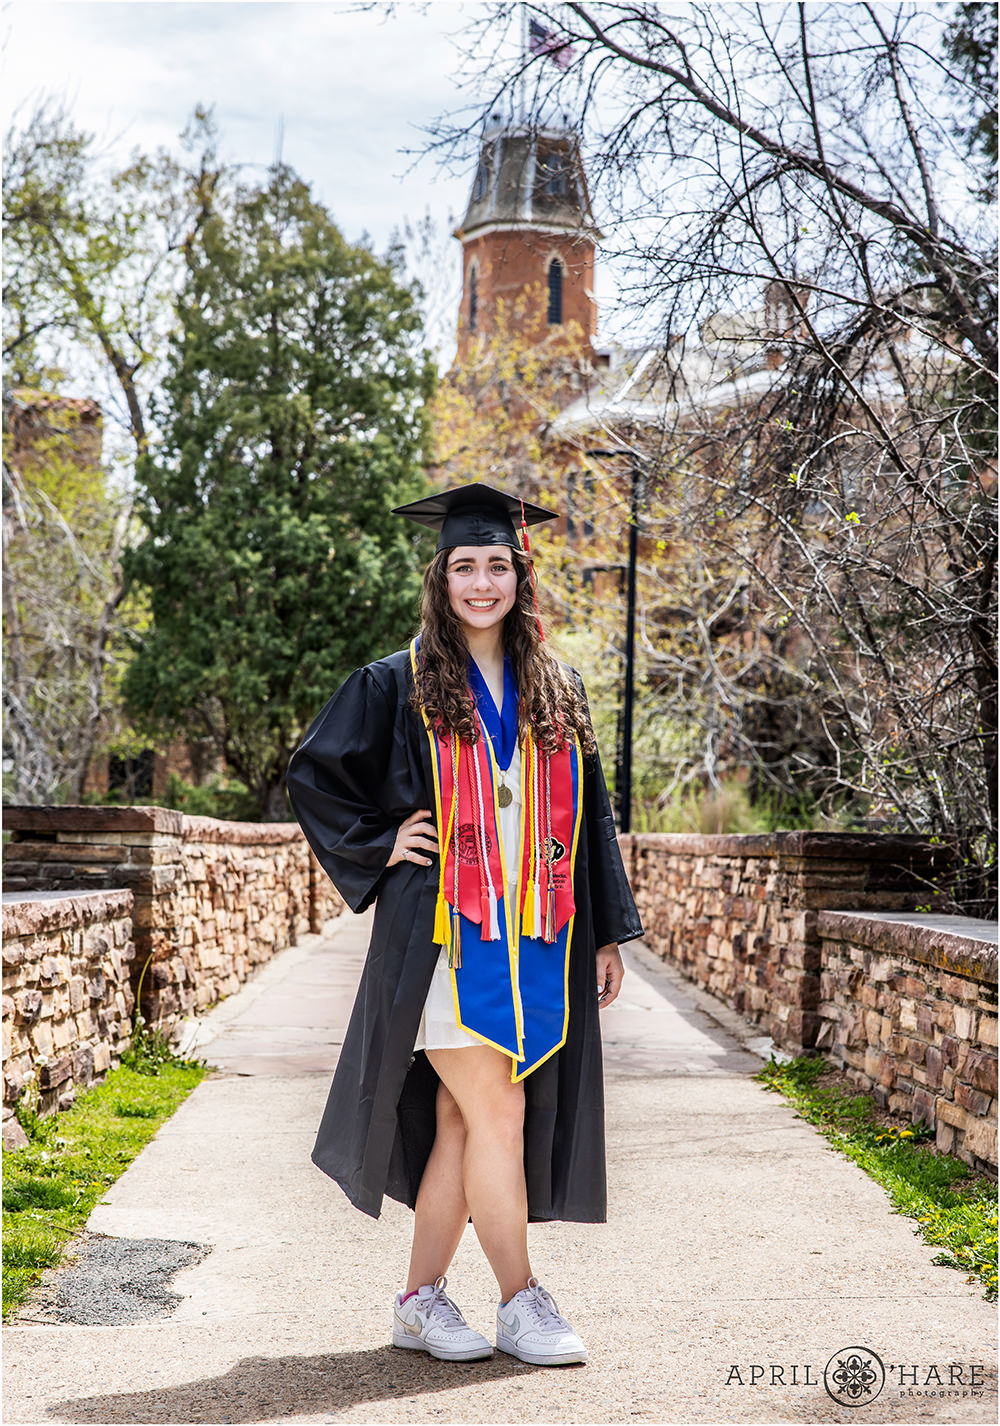 Graduation Portrait at the University of Colorado Boulder Campus on the Bridge at Varsity Lake